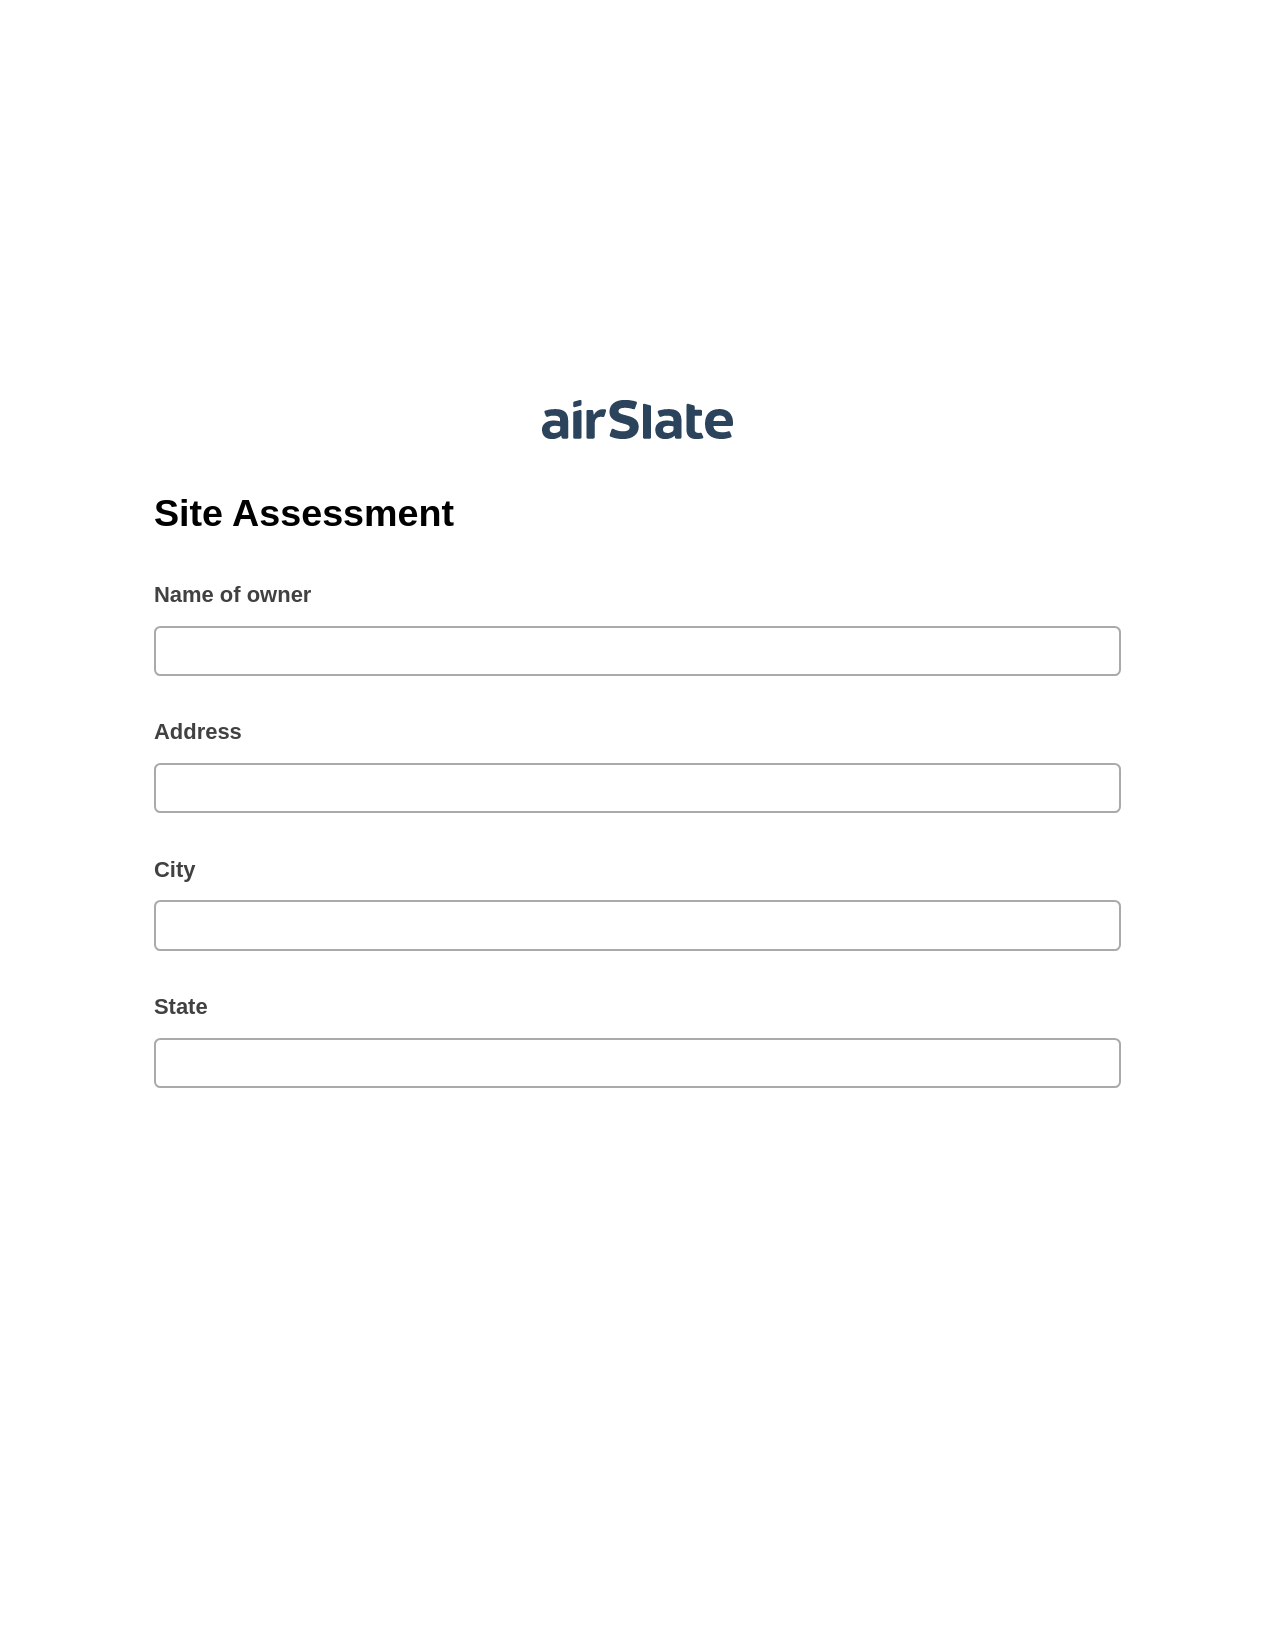 Multirole Site Assessment Pre-fill from CSV File Bot, Create NetSuite Records Bot, Slack Notification Postfinish Bot